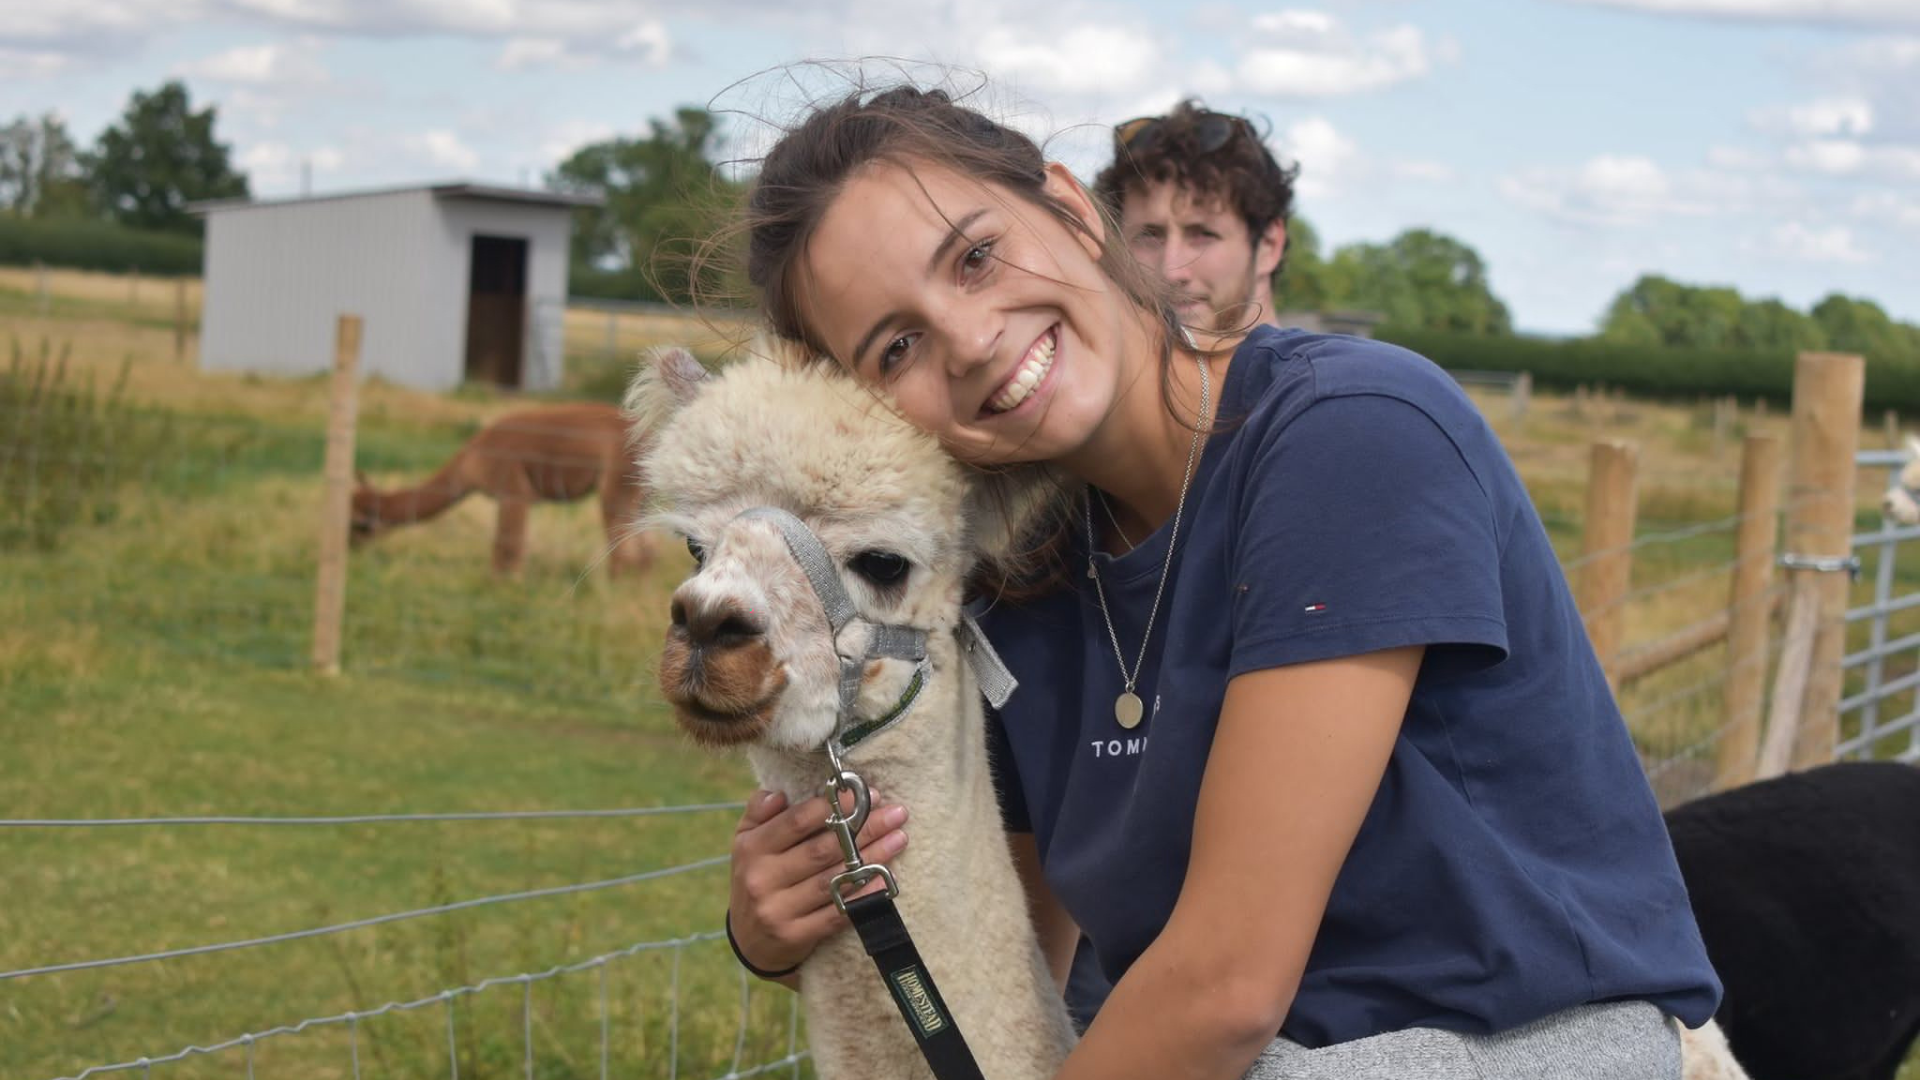 A lady smiles next to an alpaca